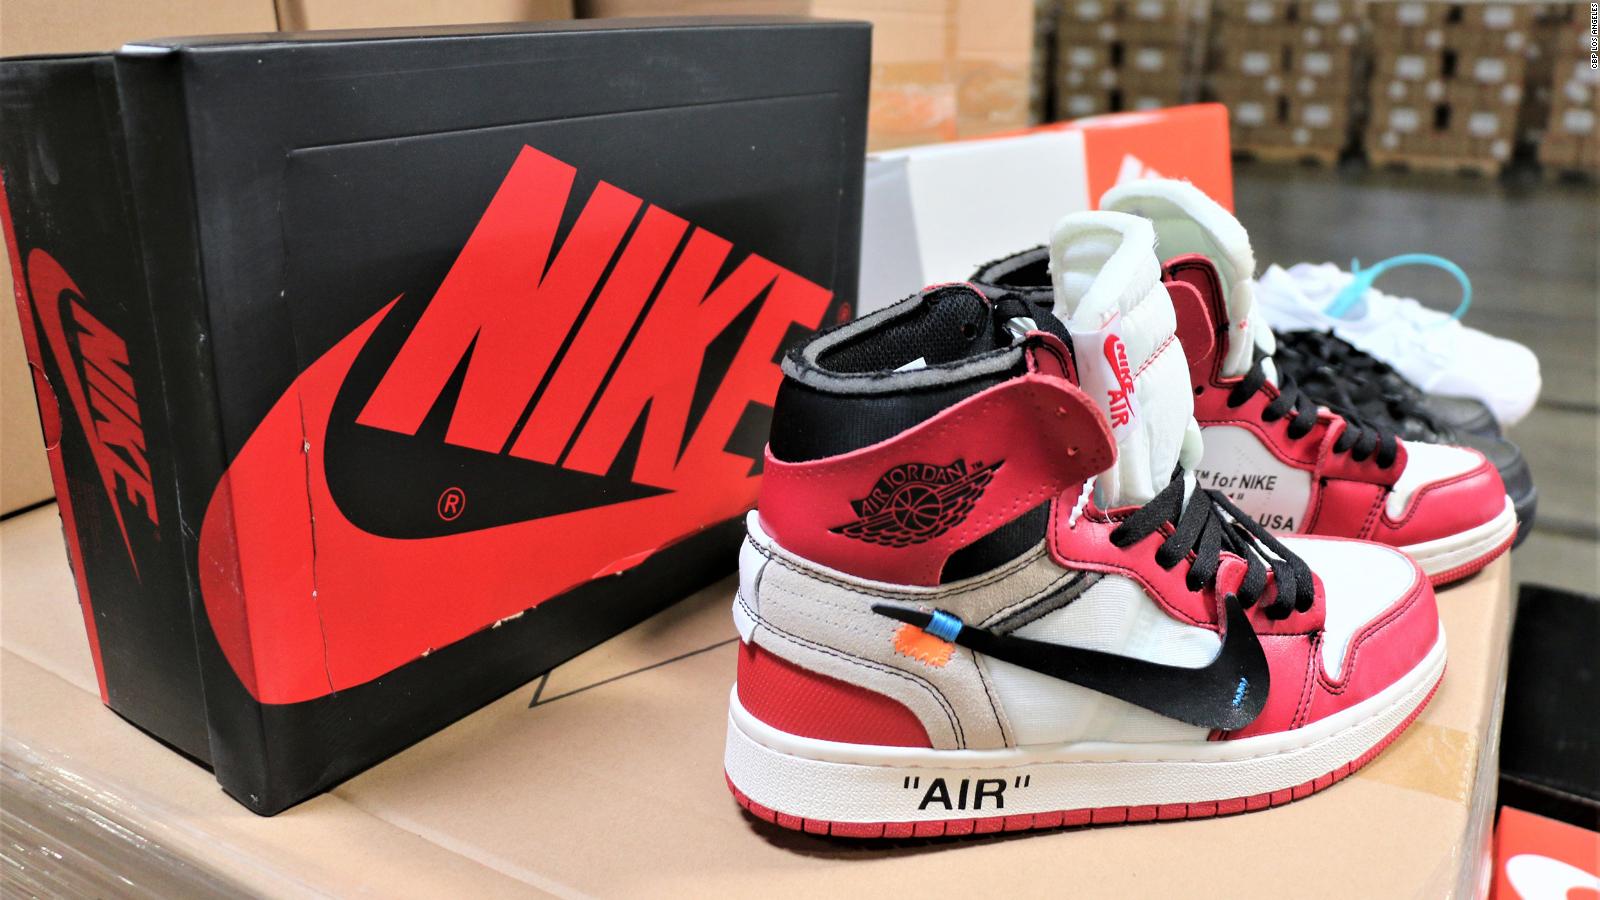 More than 14,000 fake Nikes were seized in LA - CNN